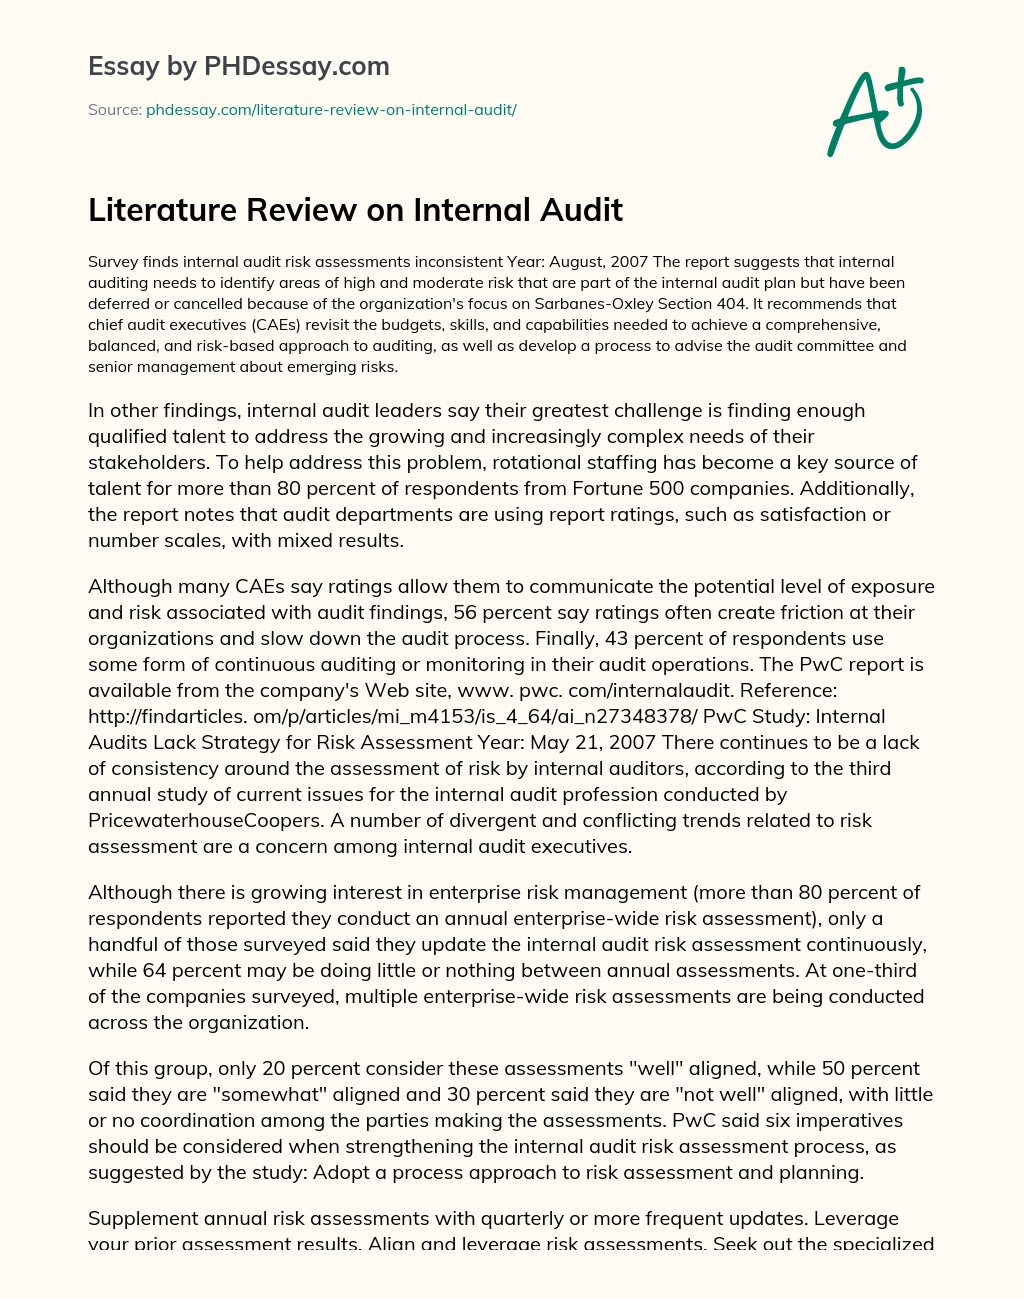 Literature Review on Internal Audit essay